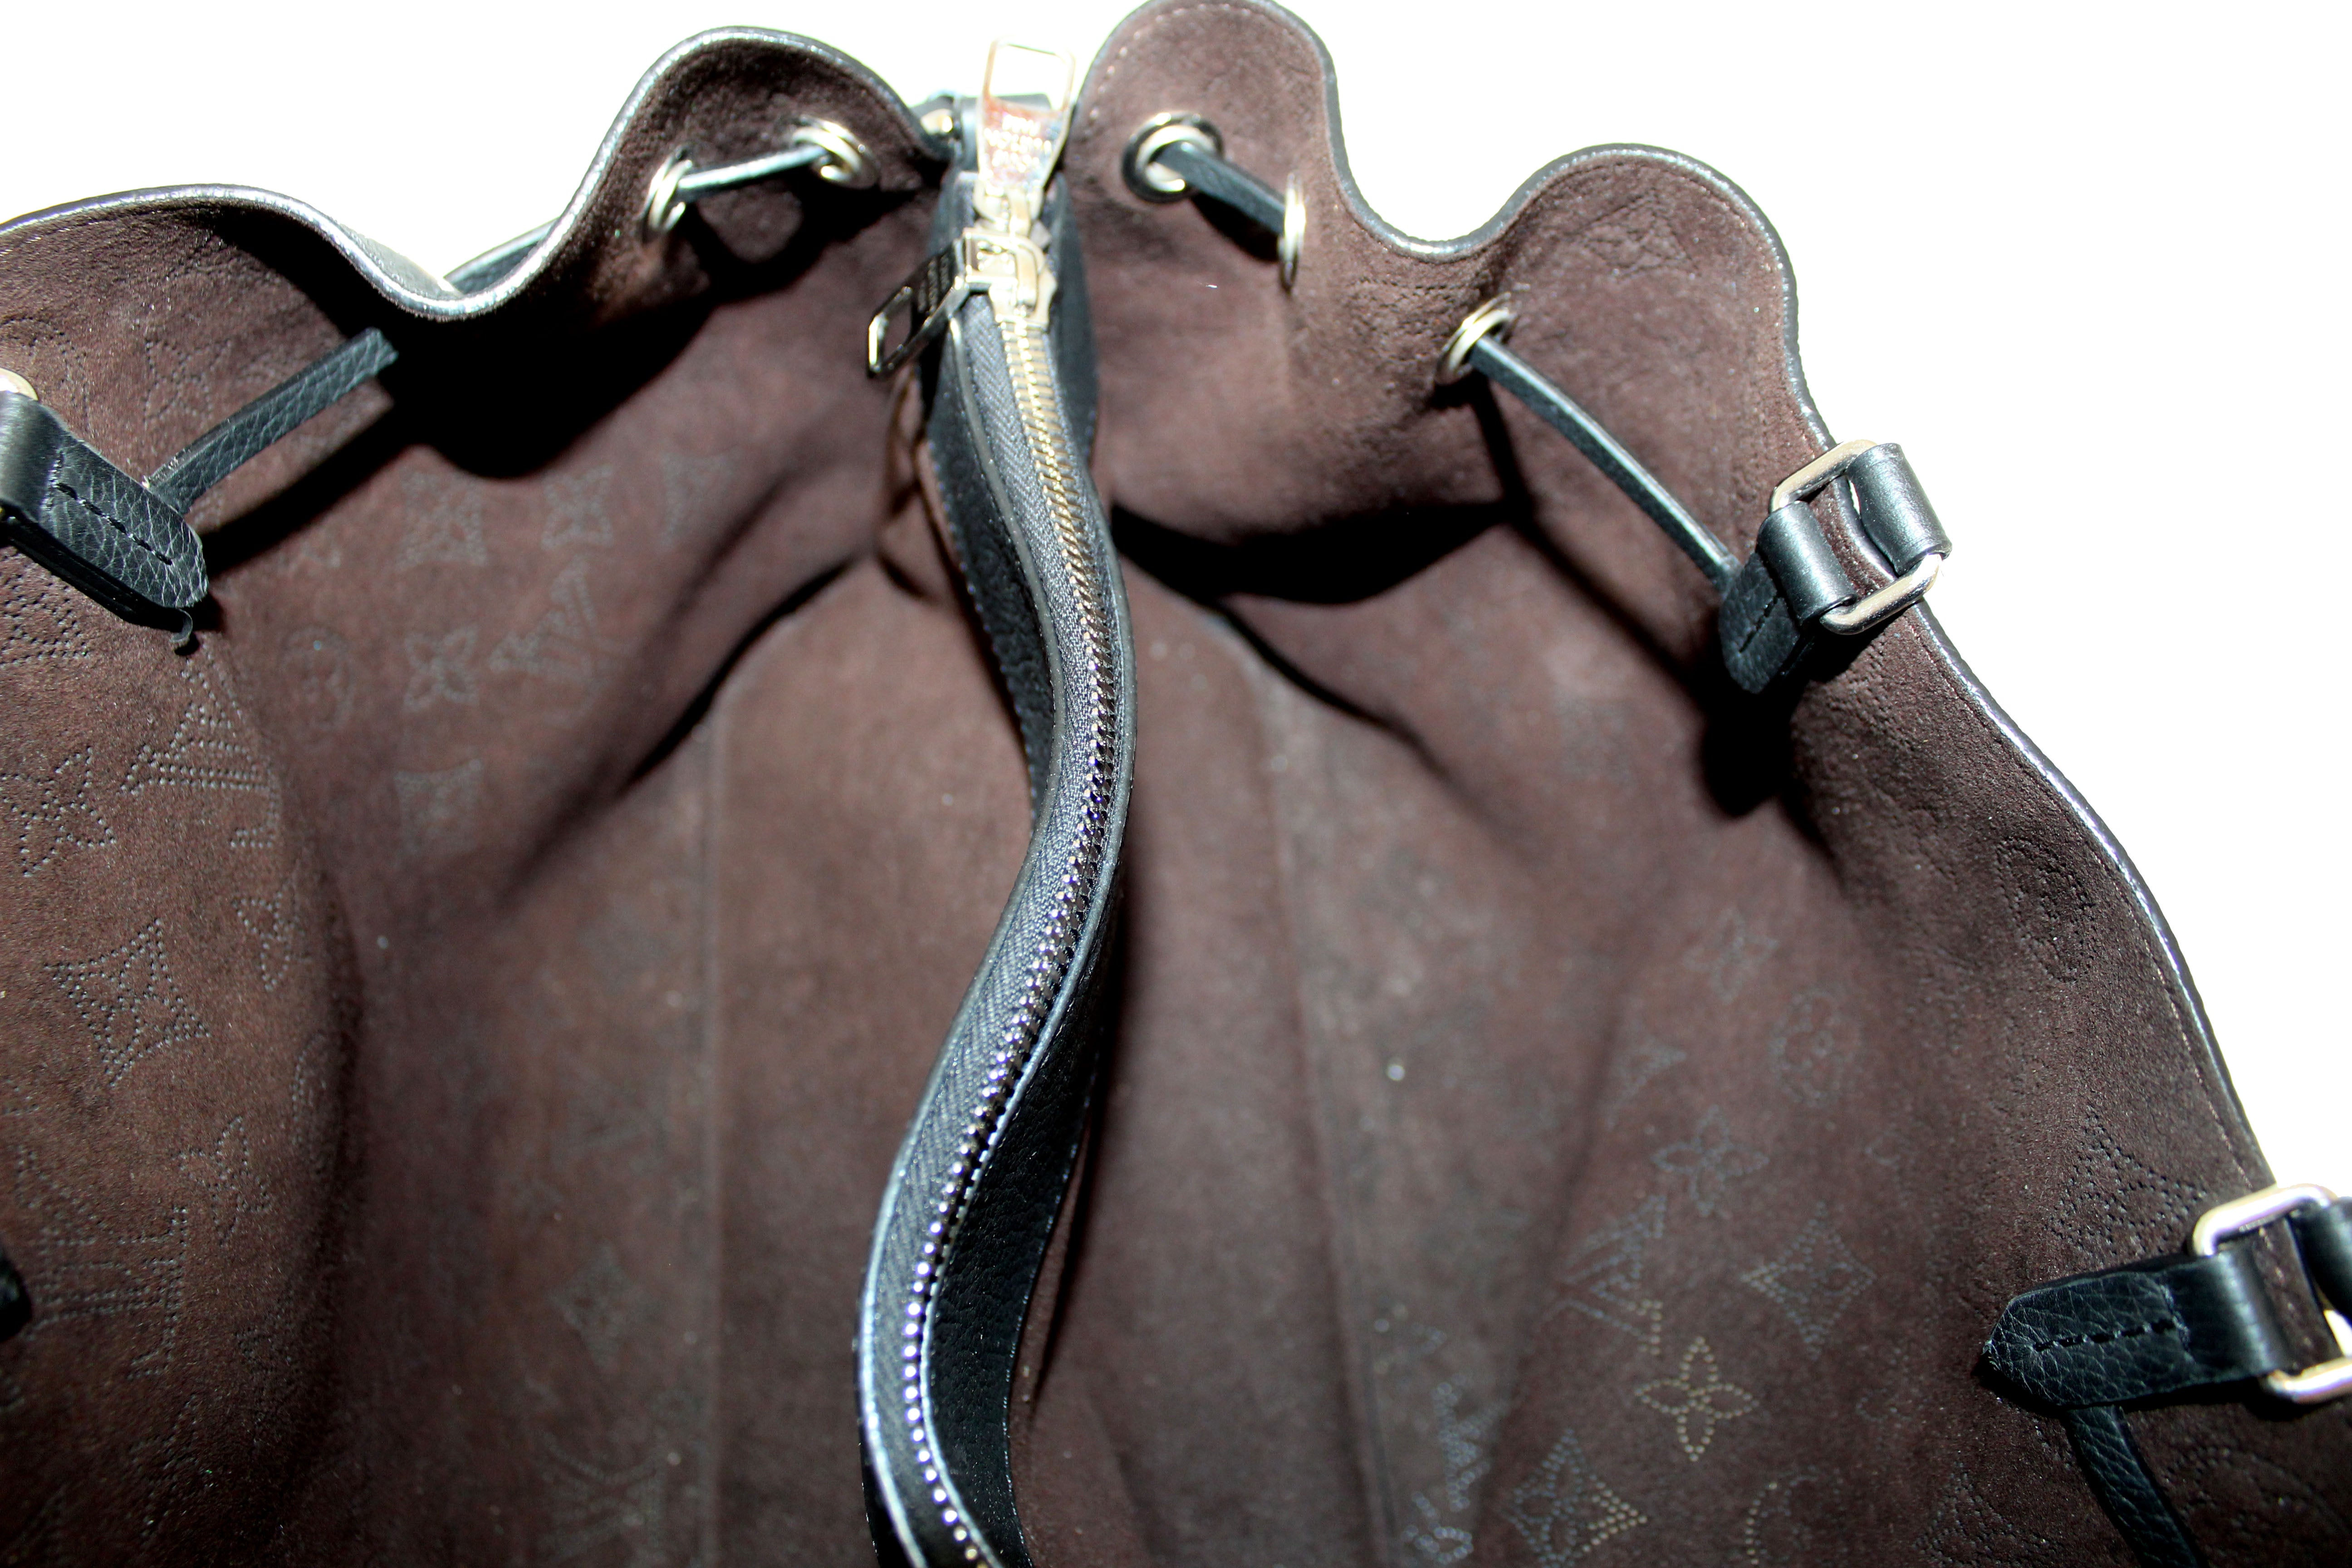 Louis Vuitton - Girolata Mahina Leather Noir